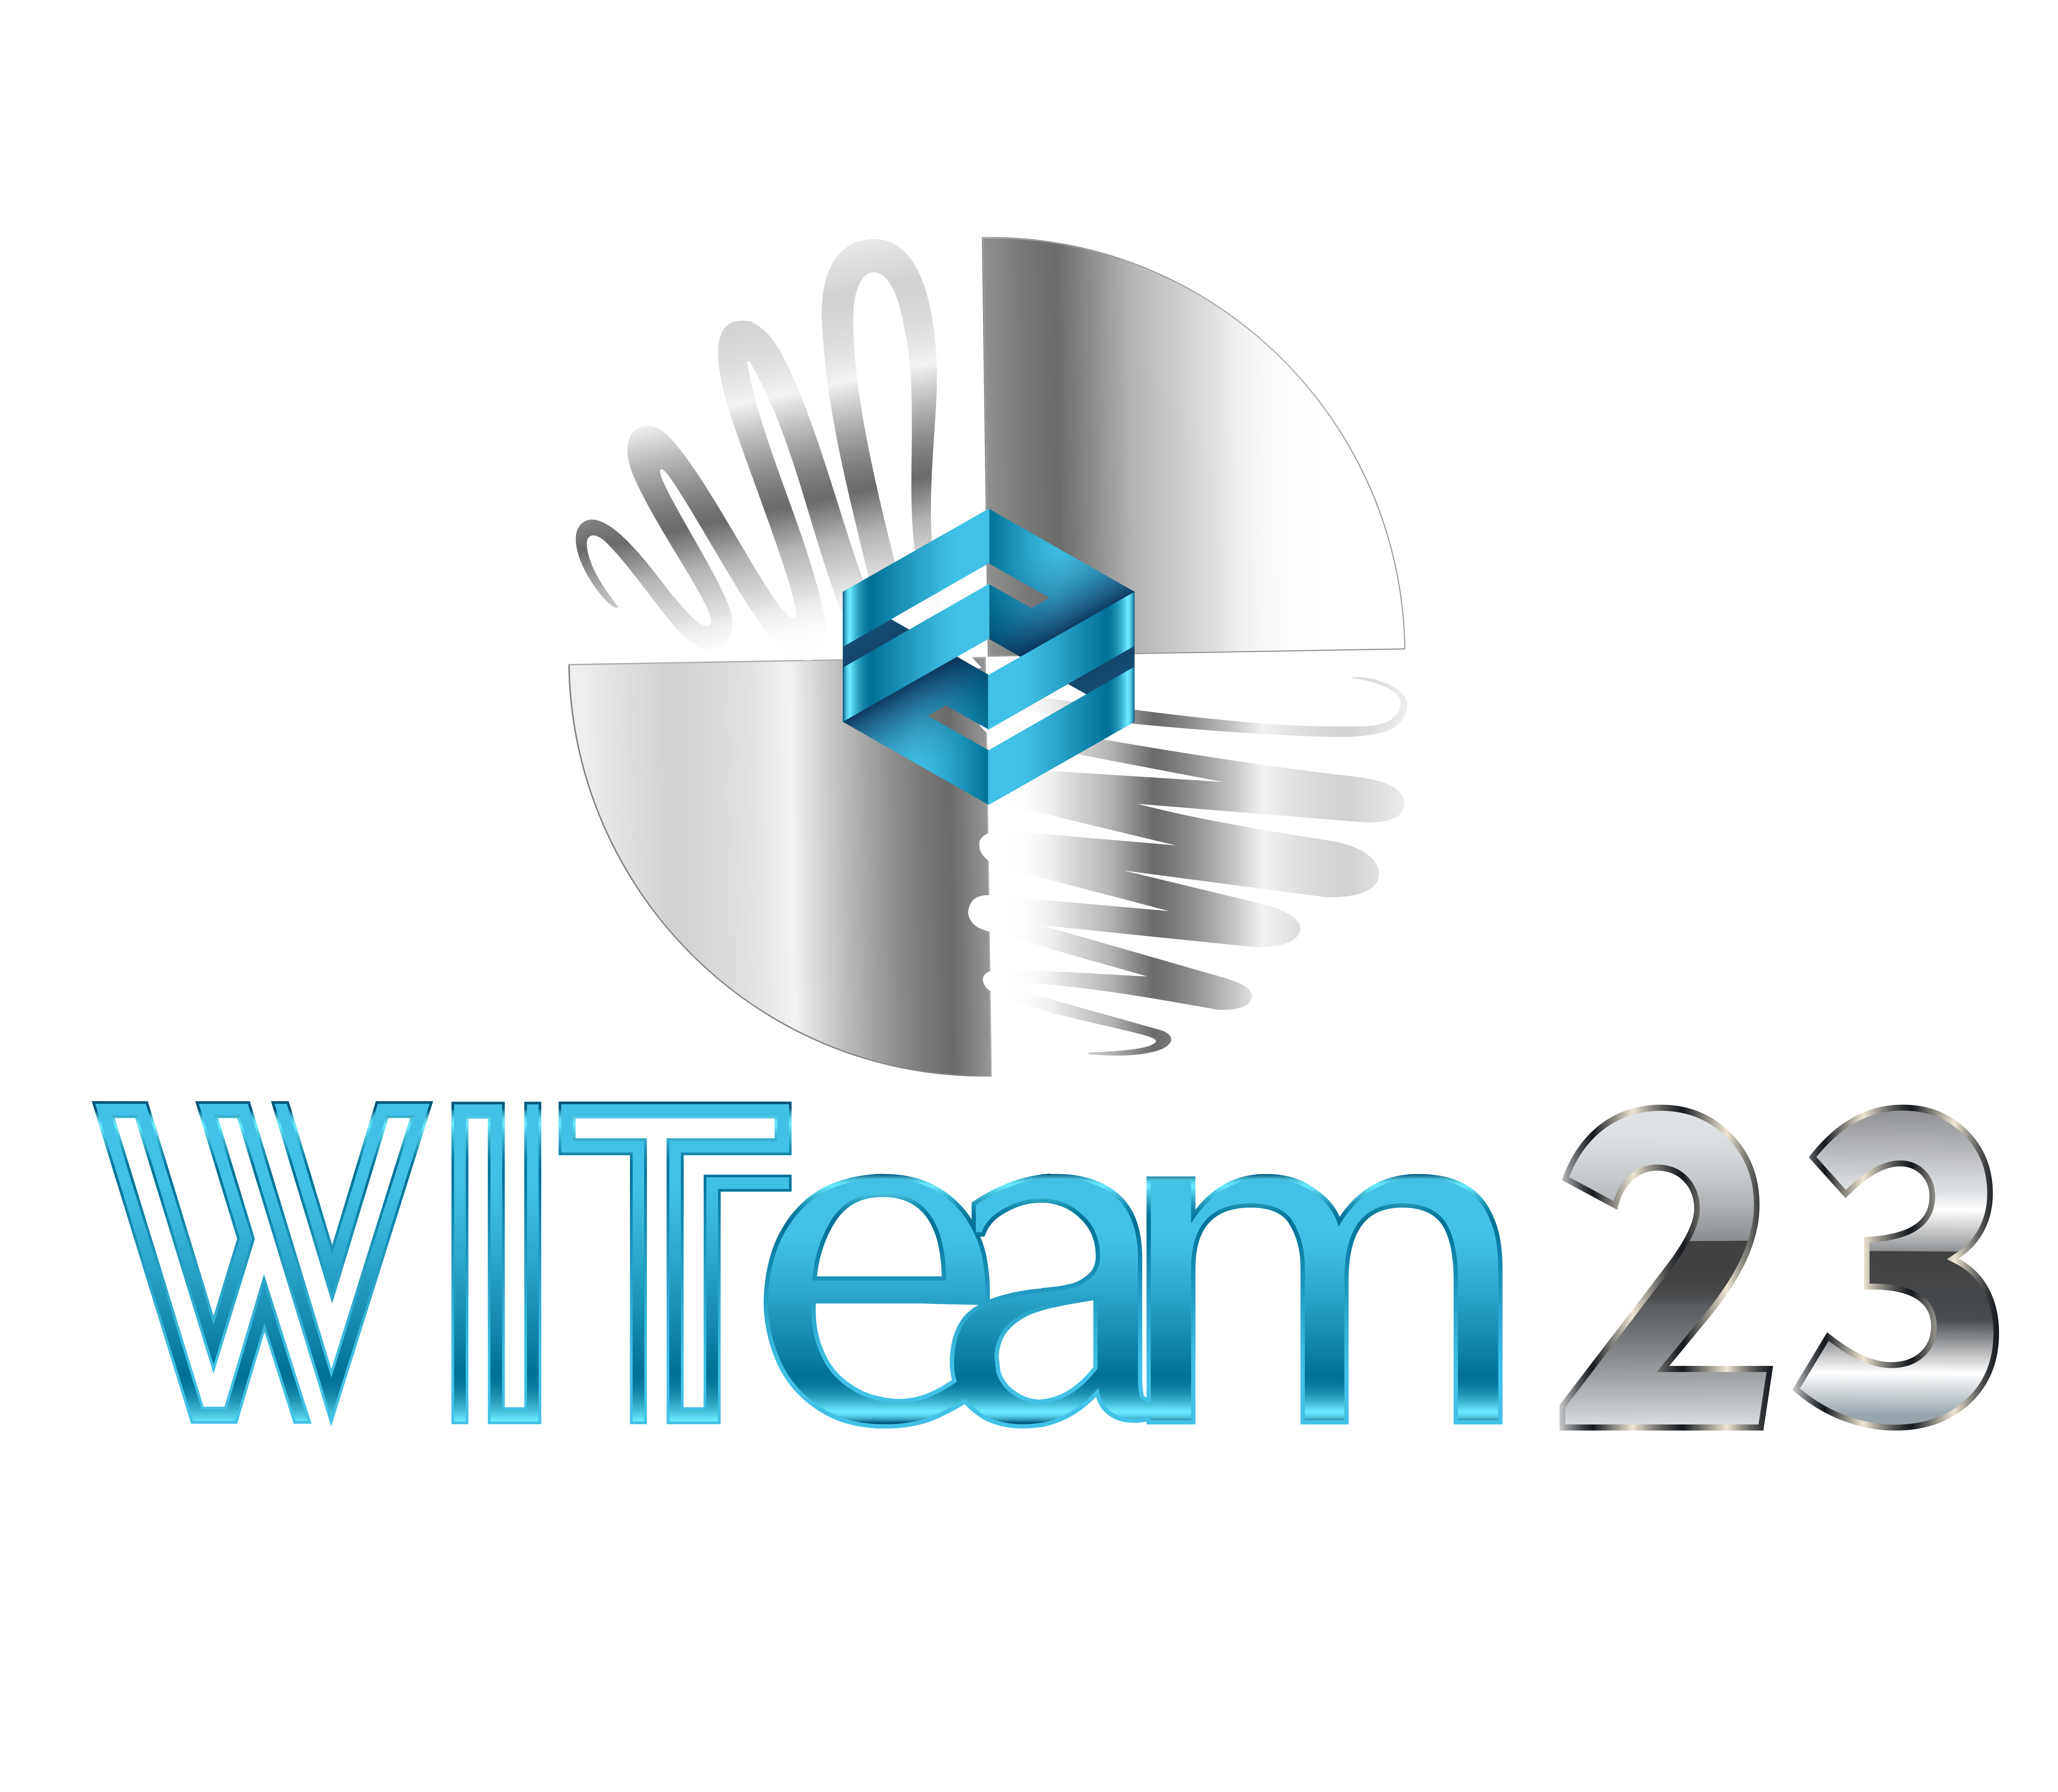 Team anuncia magno evento “CREATING A NEW VISION WITeam23”